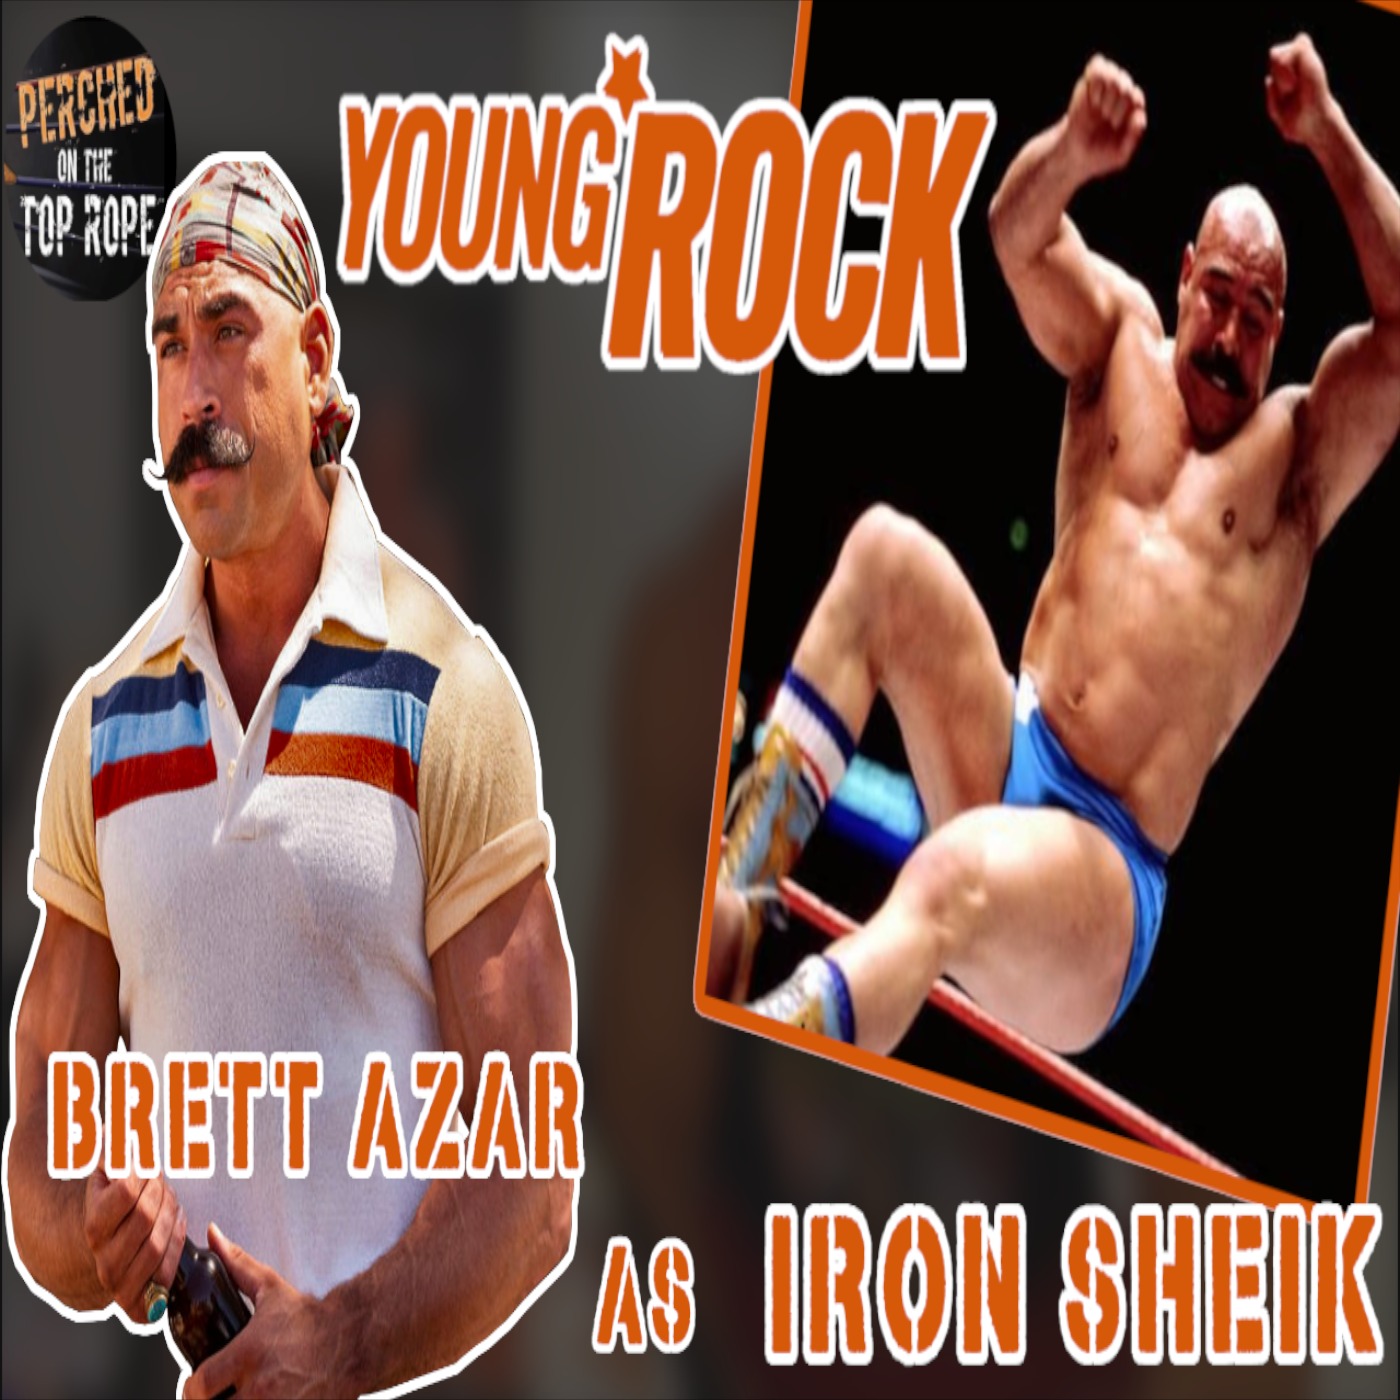 E76: NBC Young Rock Actor Brett Azar (Iron Sheik) Interview Part II